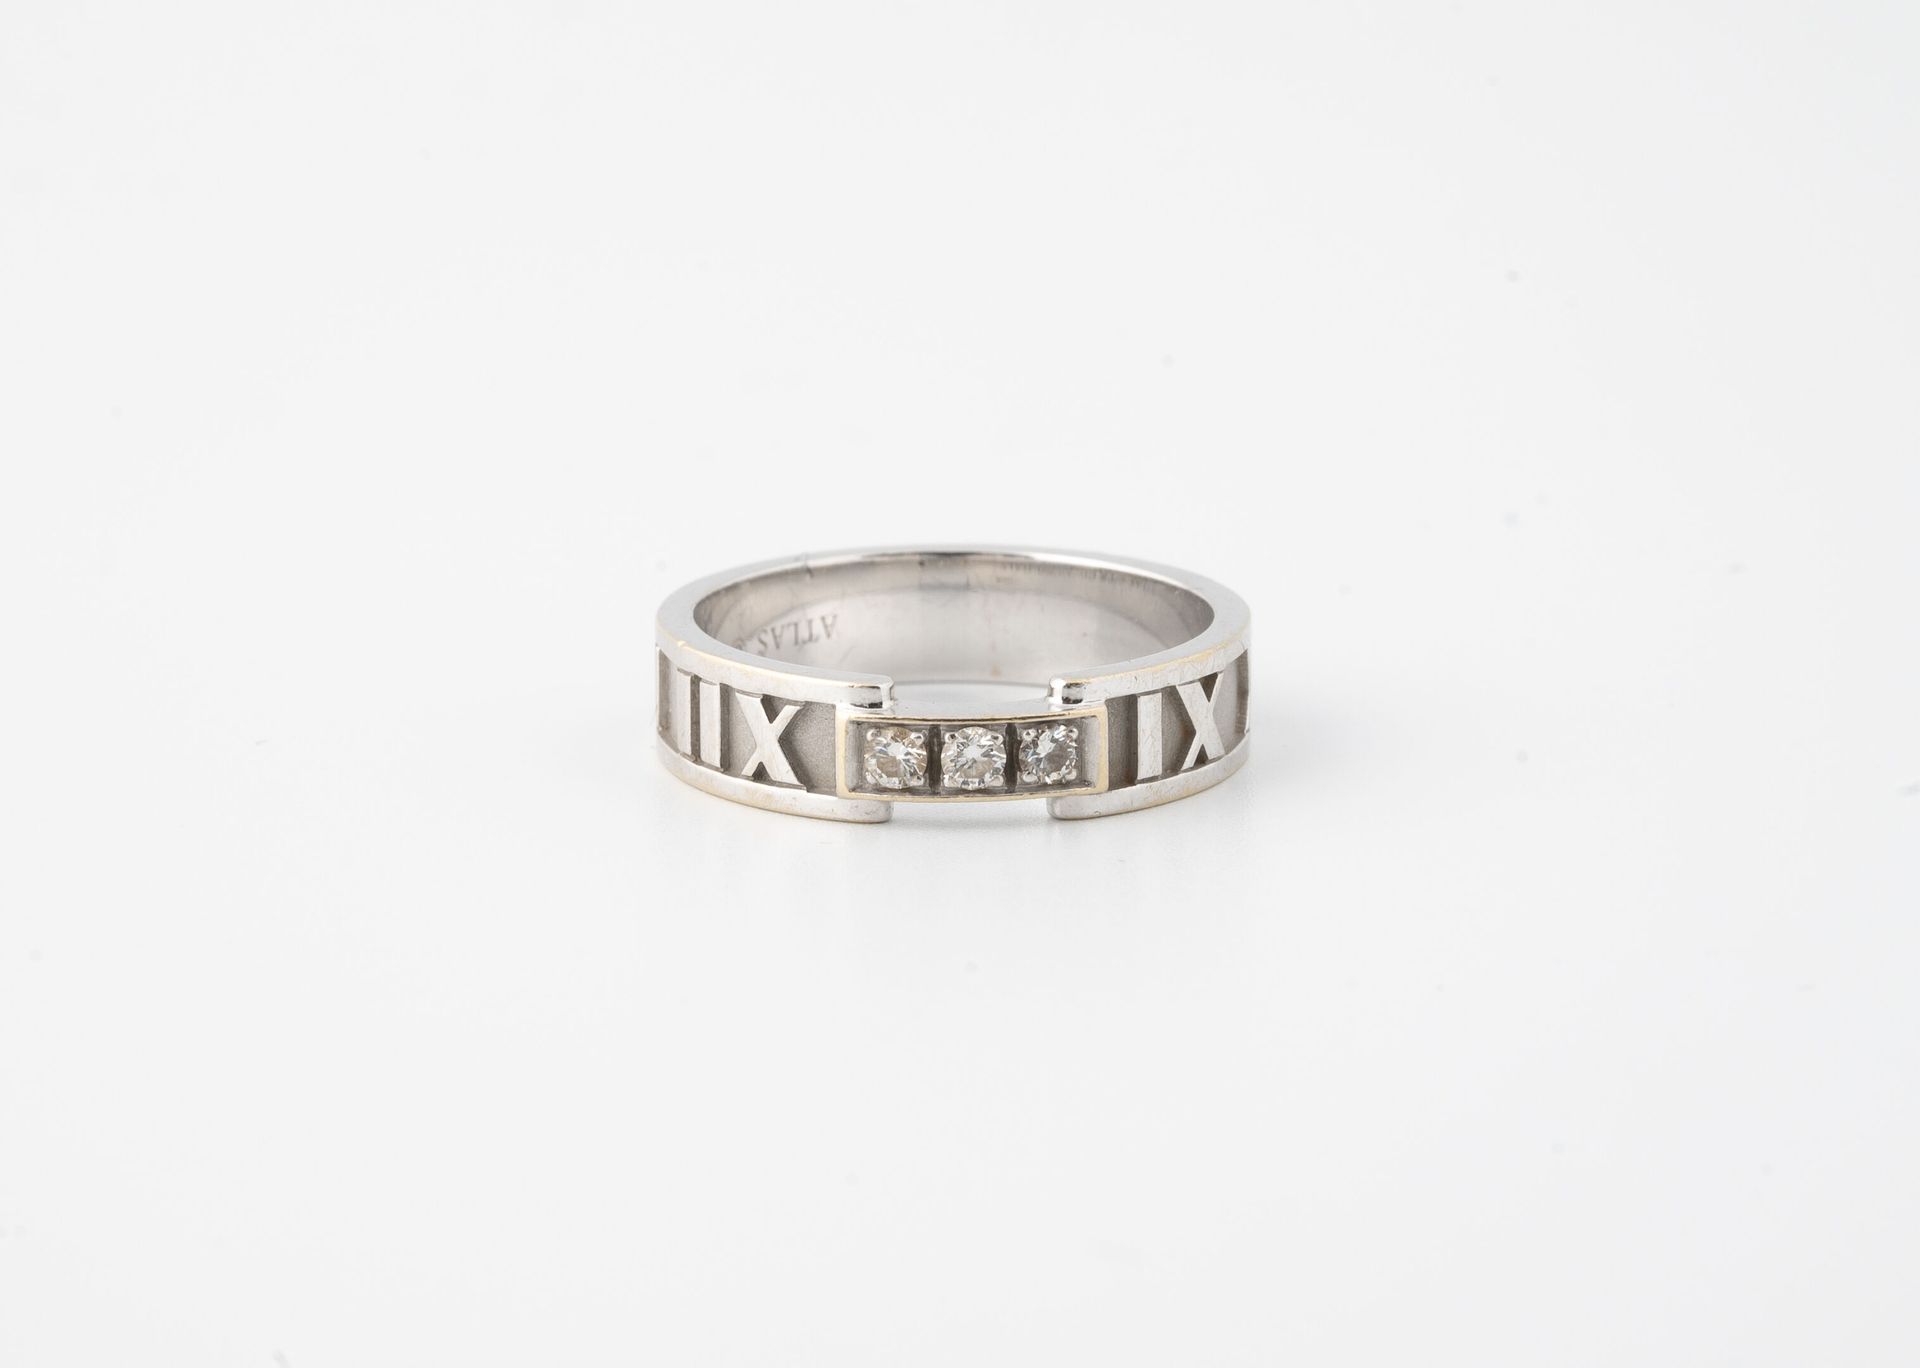 TIFFANY & CO, Atlas 白金（750）结婚戒指，部分镶嵌罗马数字，中心是三颗爪形切割的小钻石。

在戒指上签名。 

毛重：6.1克 - 手指大&hellip;